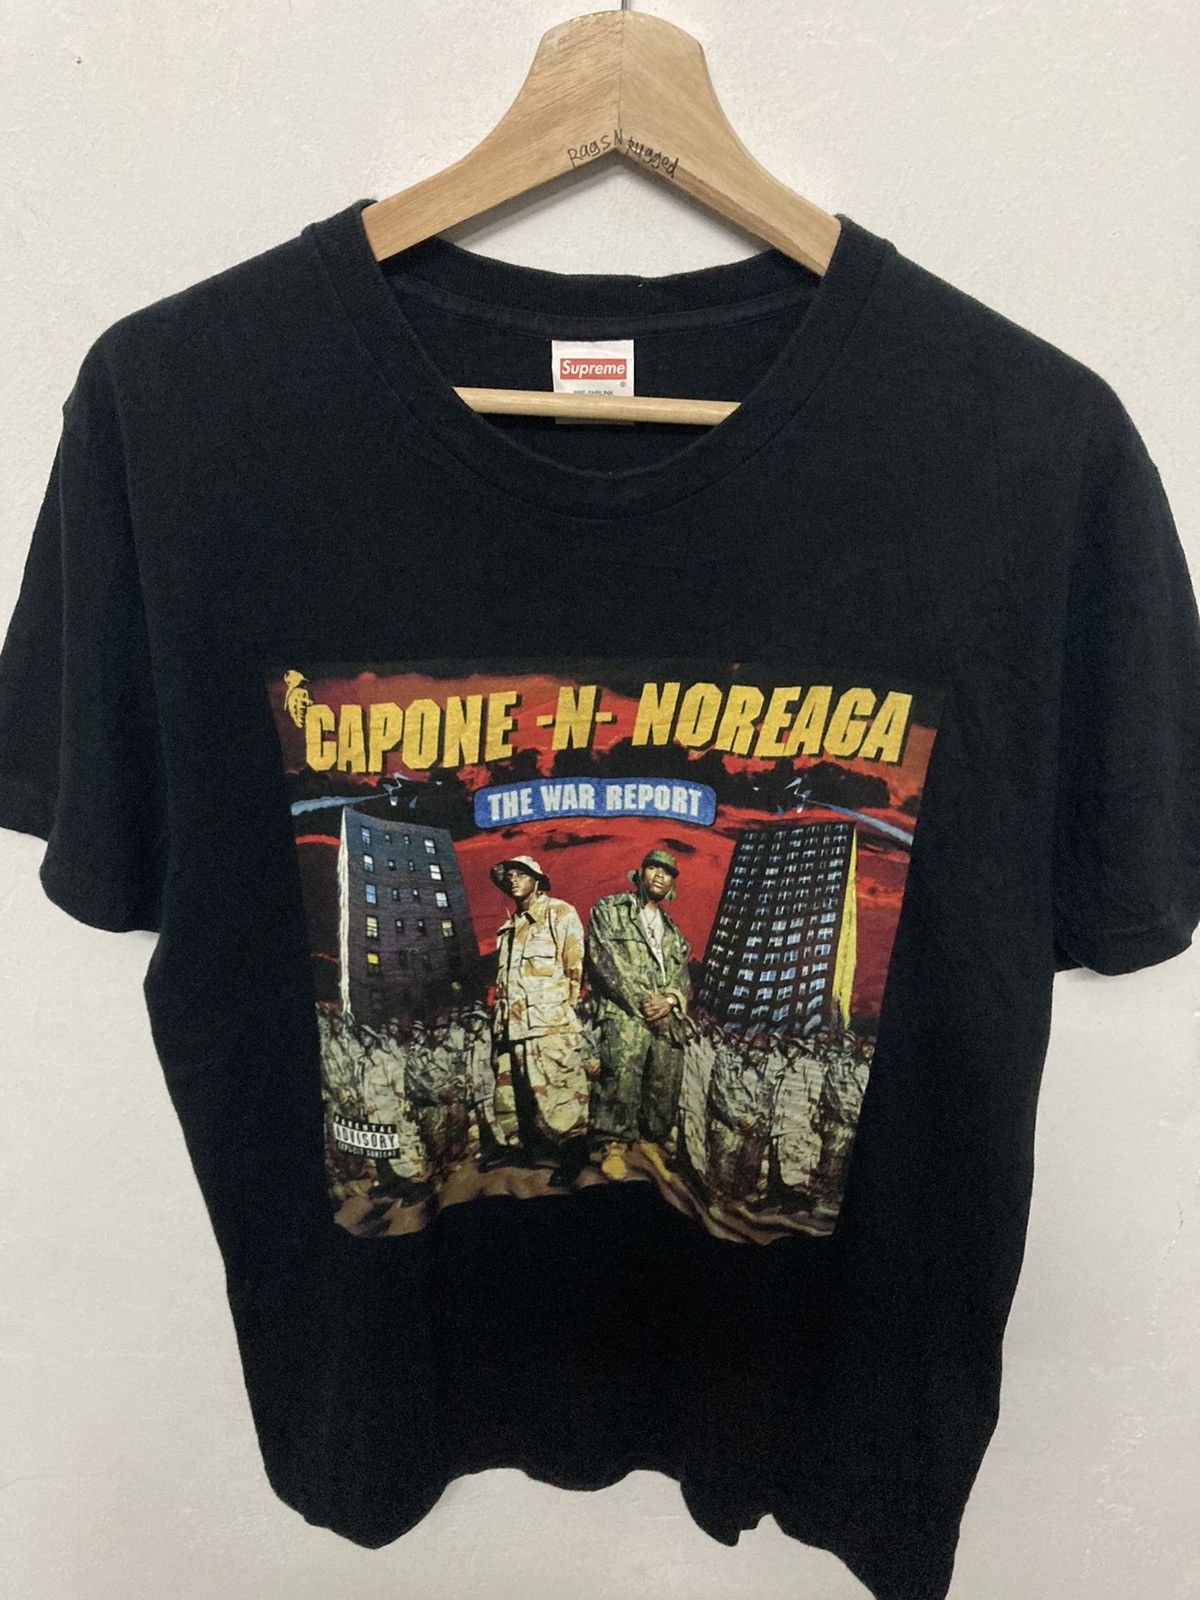 Supreme FW2016 Capone-N-Noreaga (The War Report) Tshirt - 3